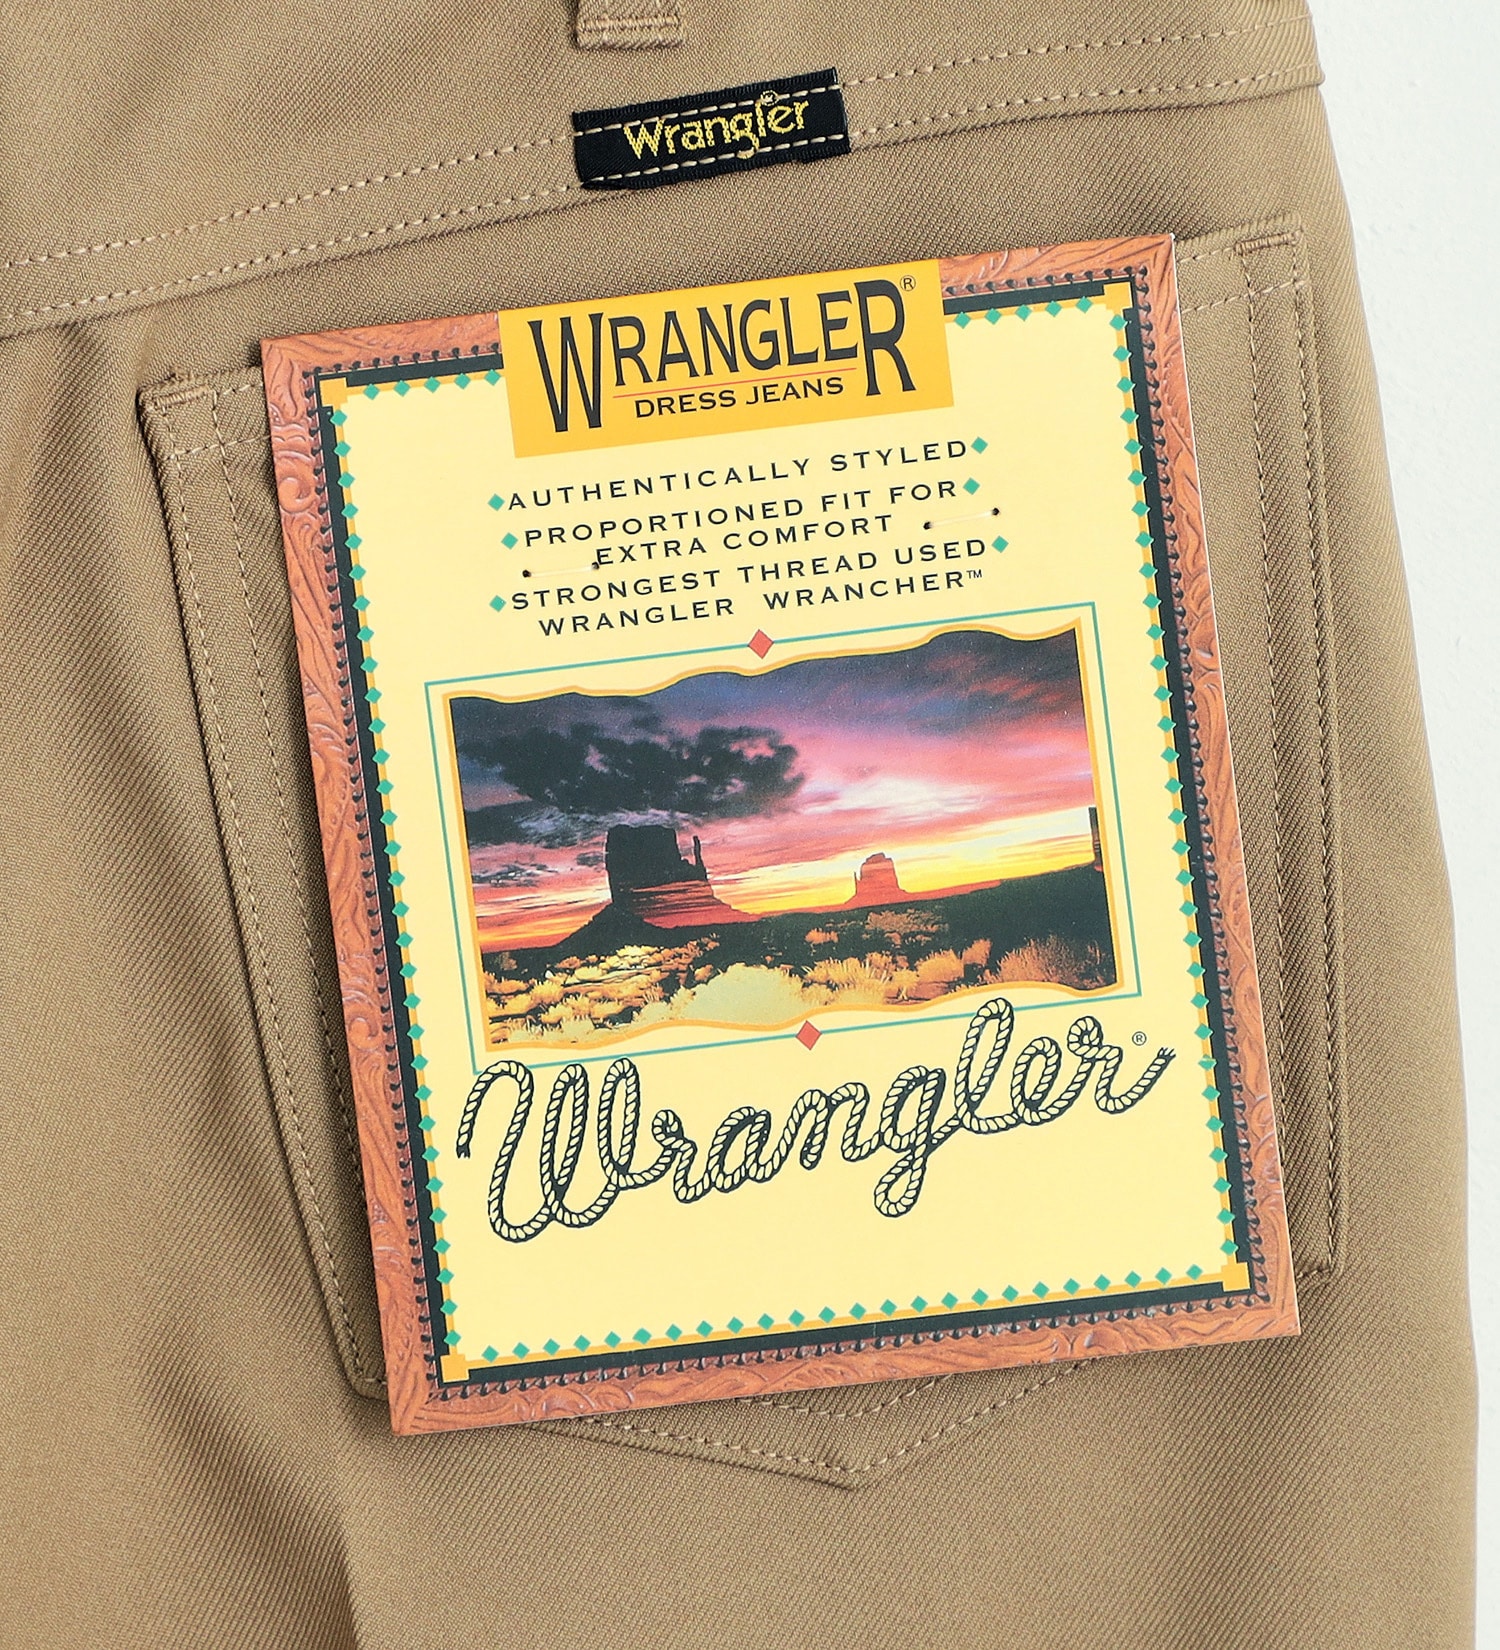 Wrangler(ラングラー)のWRANGLER WRANCHER/ランチャー フレアードレスパンツ(レディース)|パンツ/パンツ/レディース|ベージュ